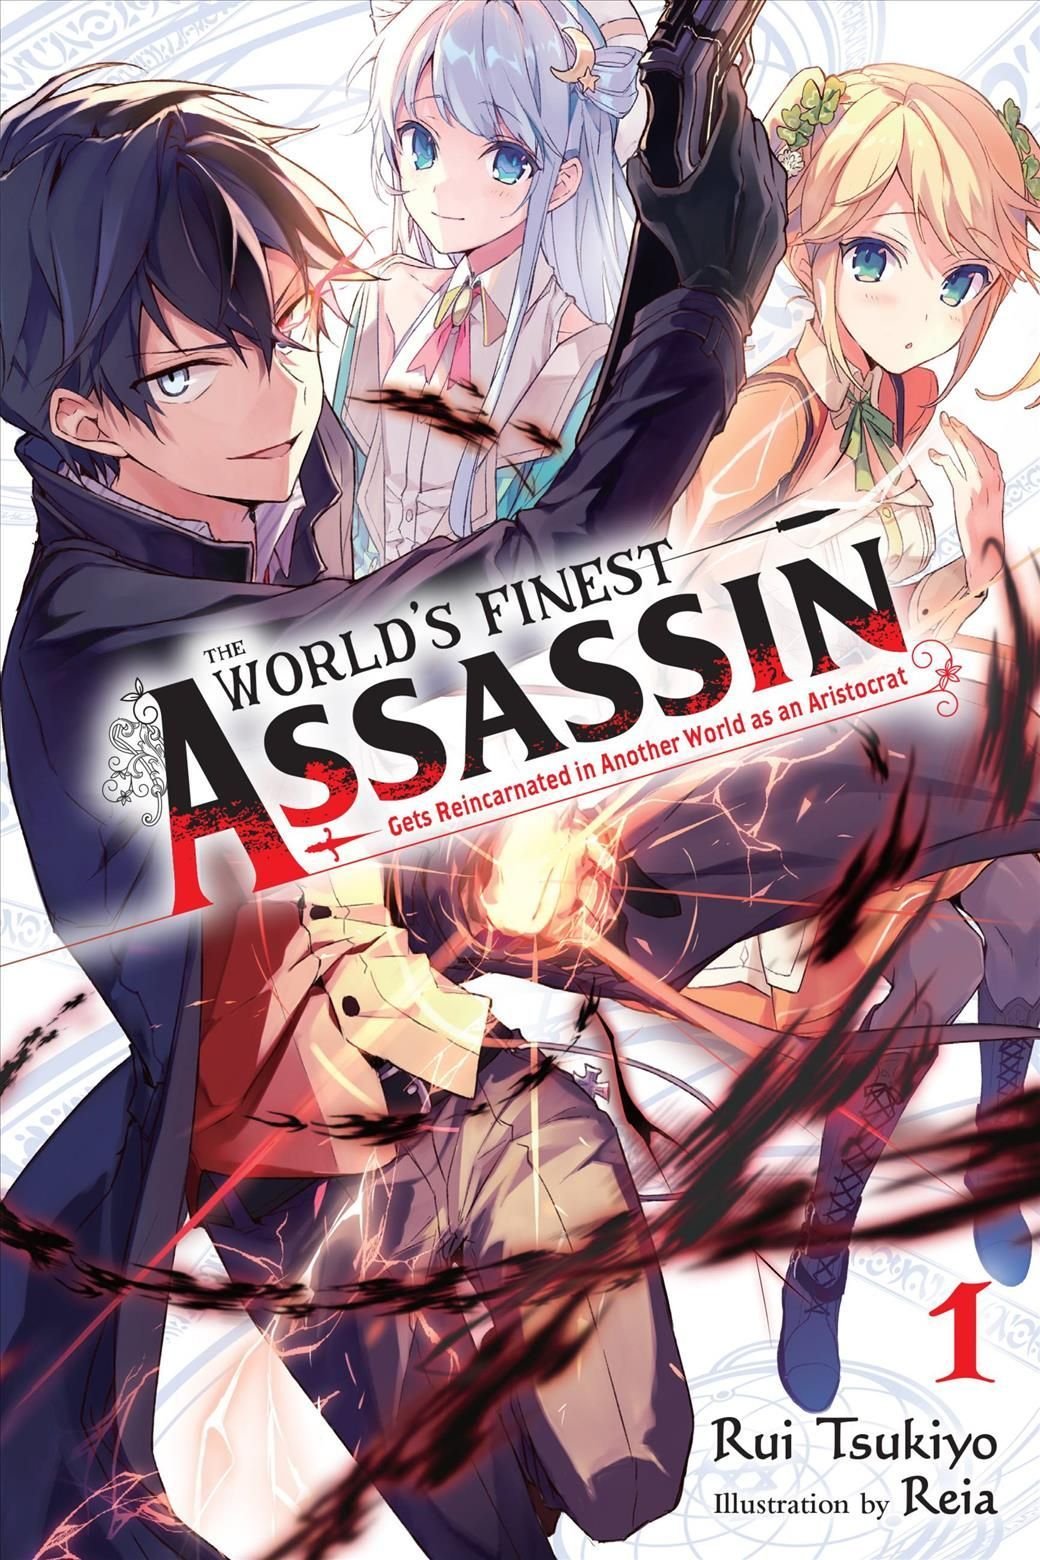 The World's Finest Assassin Gets Reincarnated in Another World, Vol. 1 (light novel)